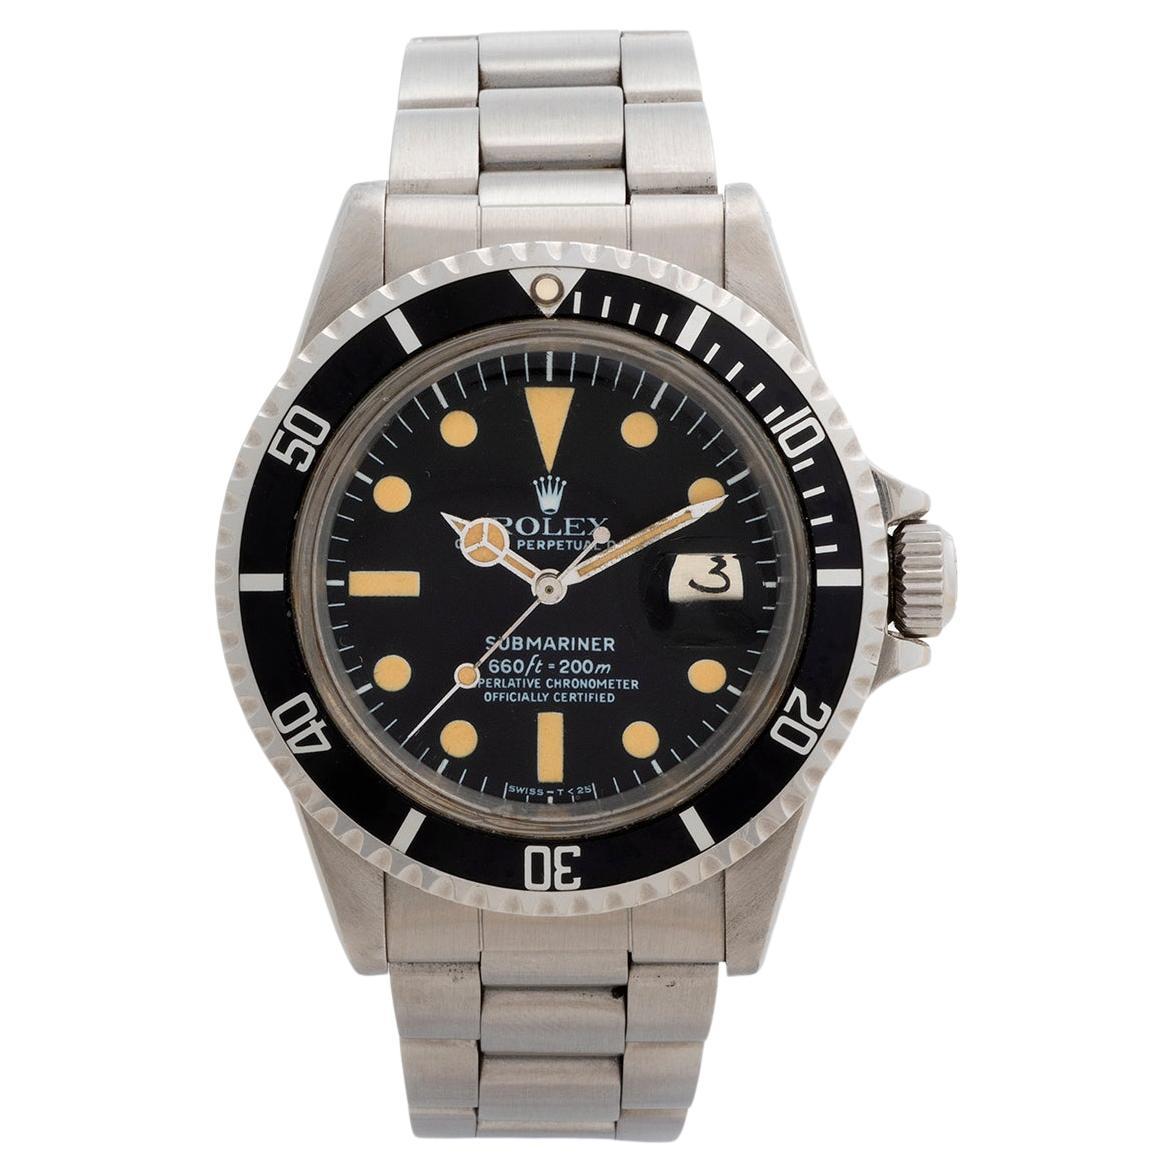 Rolex Submariner Date Wristwatch ref 1680, with patination, 1979, super history.